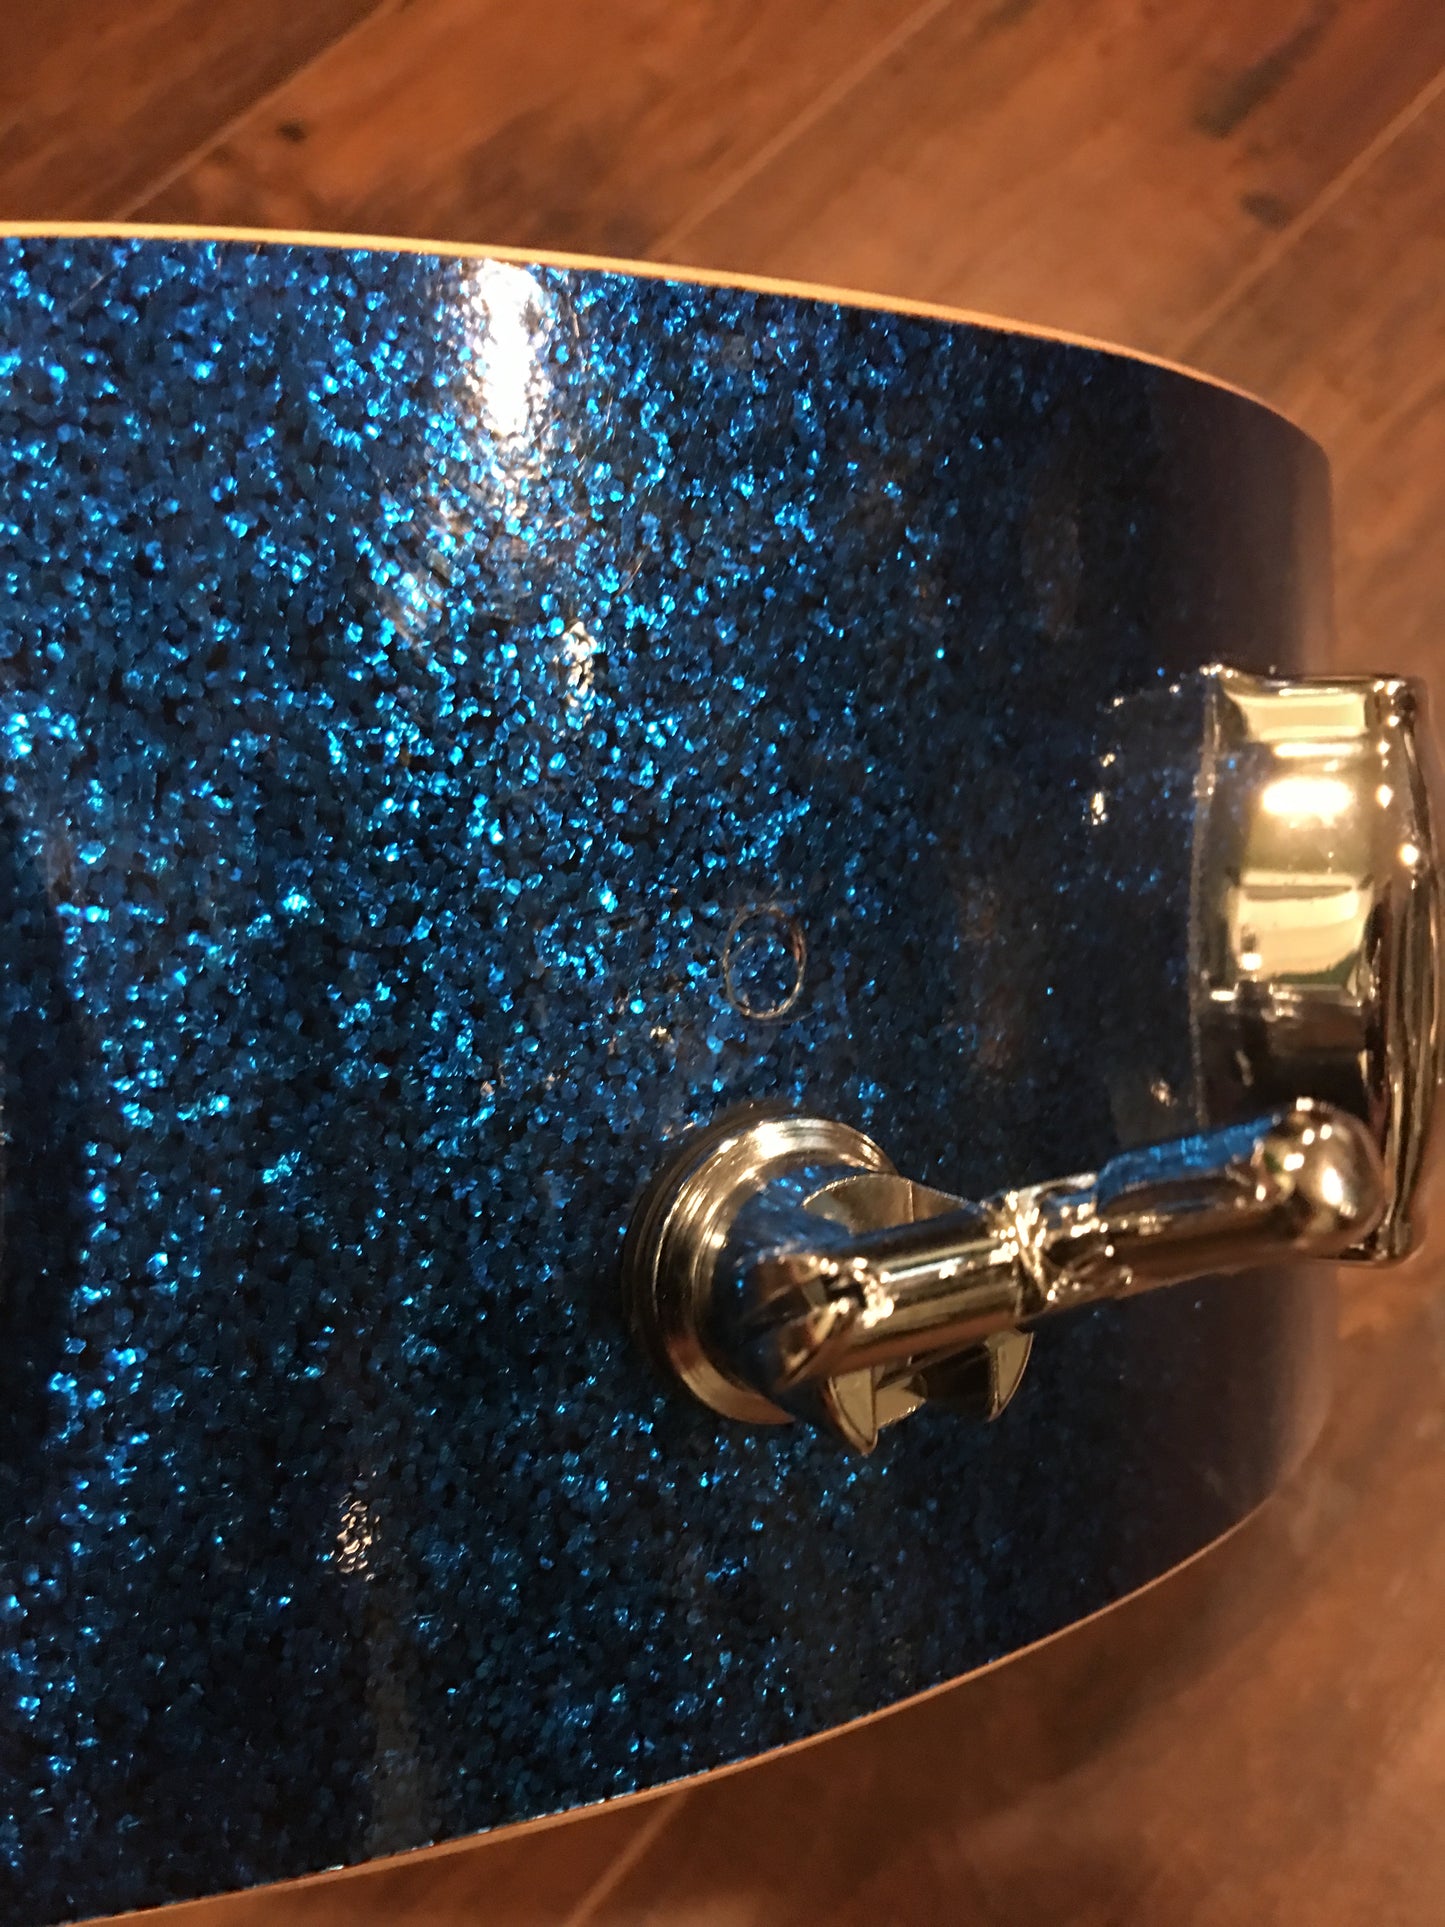 1960s Camco Oaklawn Blue Sparkle Tuxedo Eddie Knight Drum Set